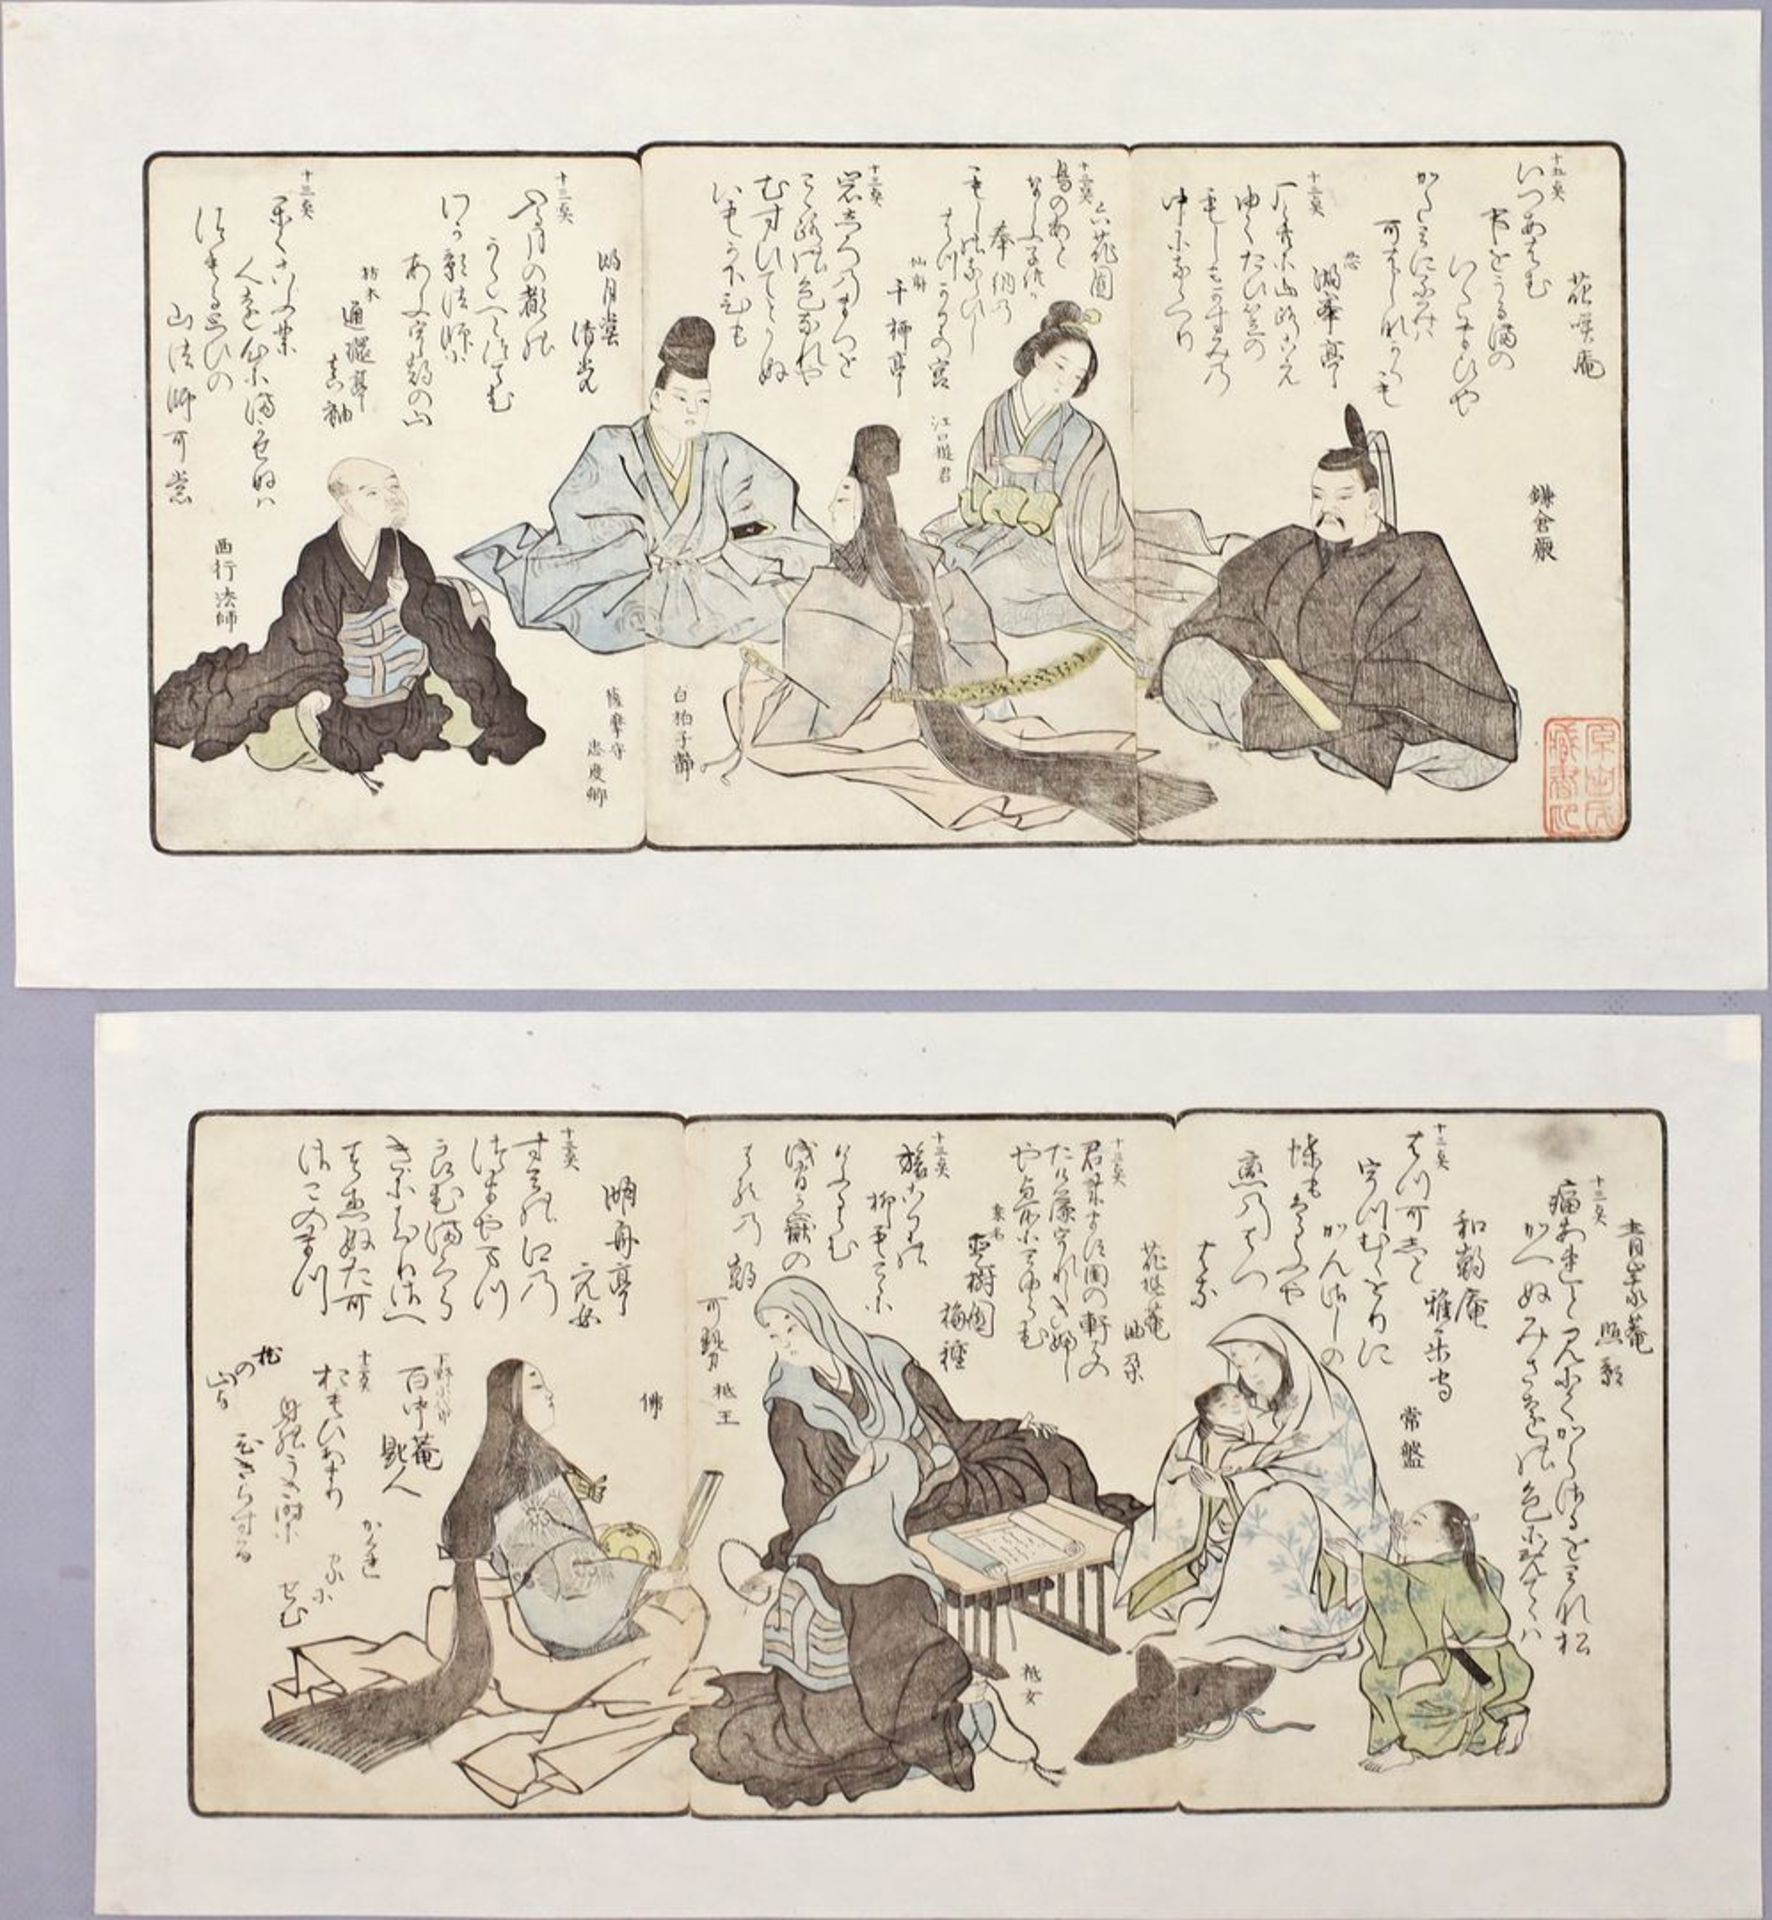 Masanobu, Kitao (1761 - 1816)